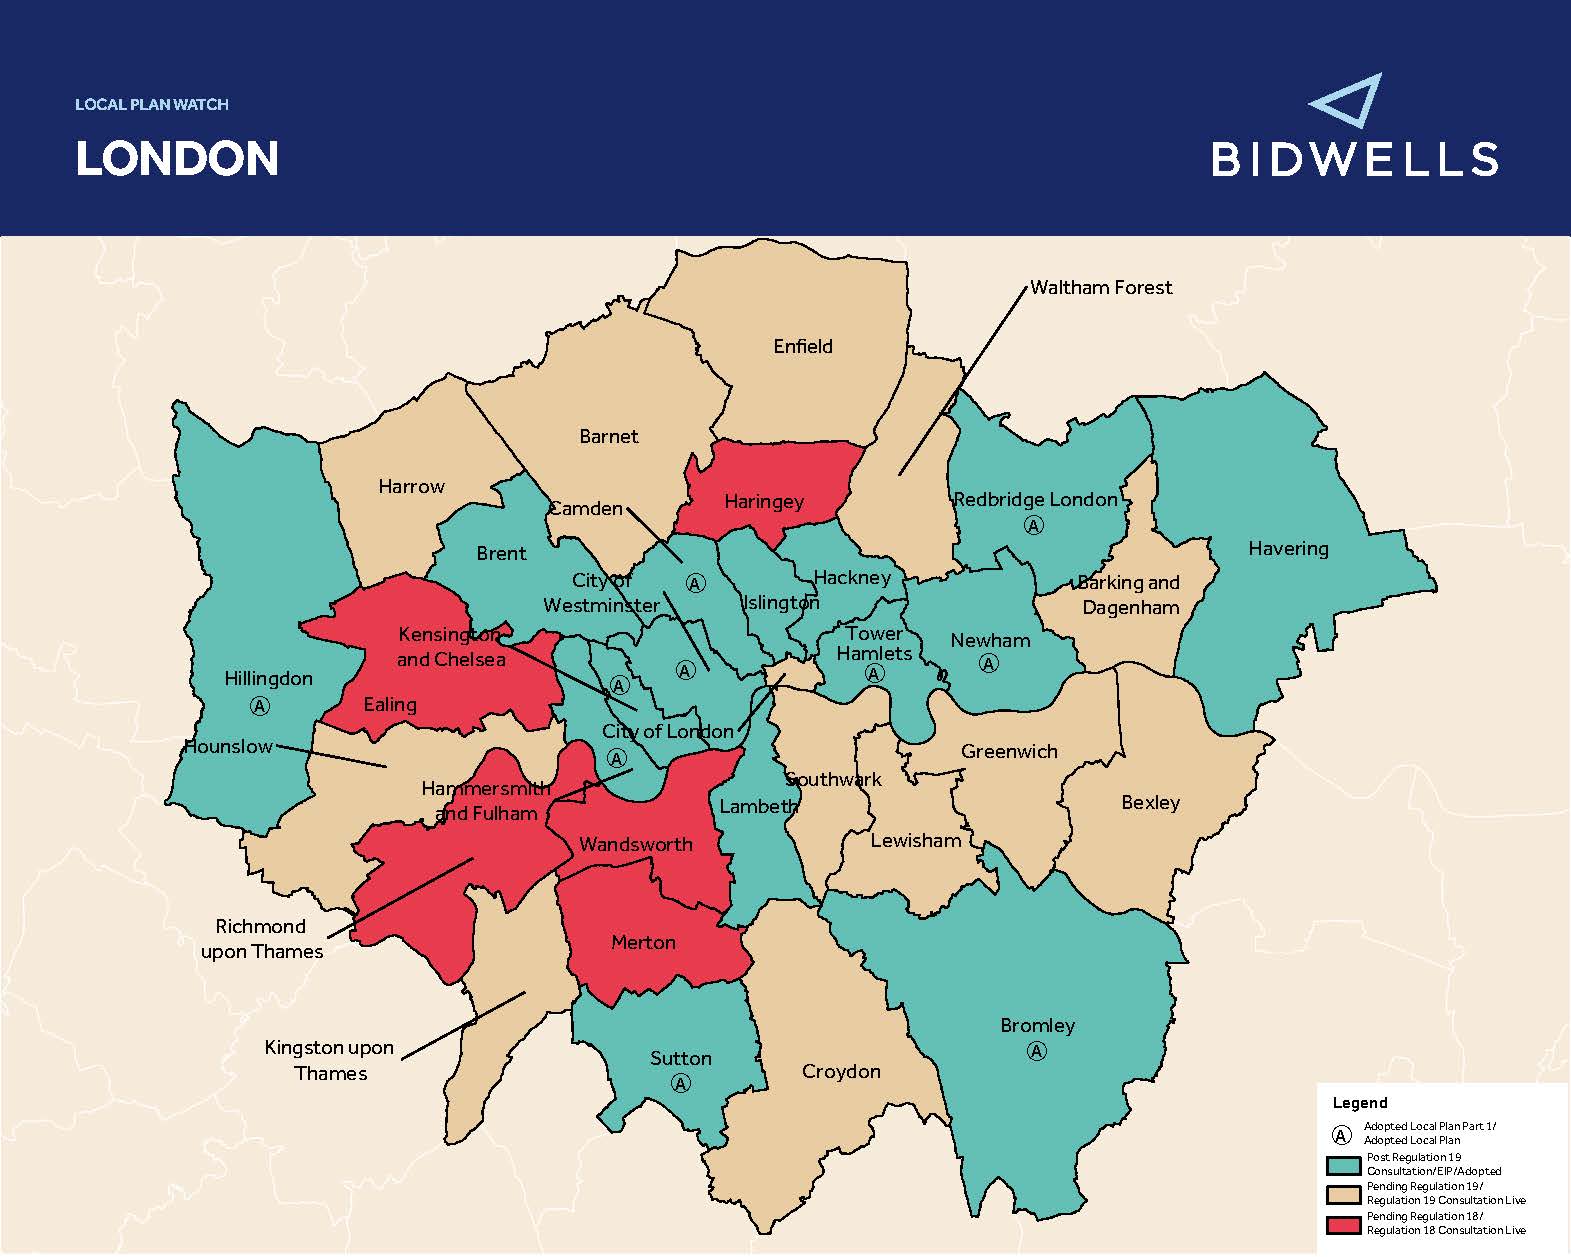 London Local Plan Watch - Spring 2020